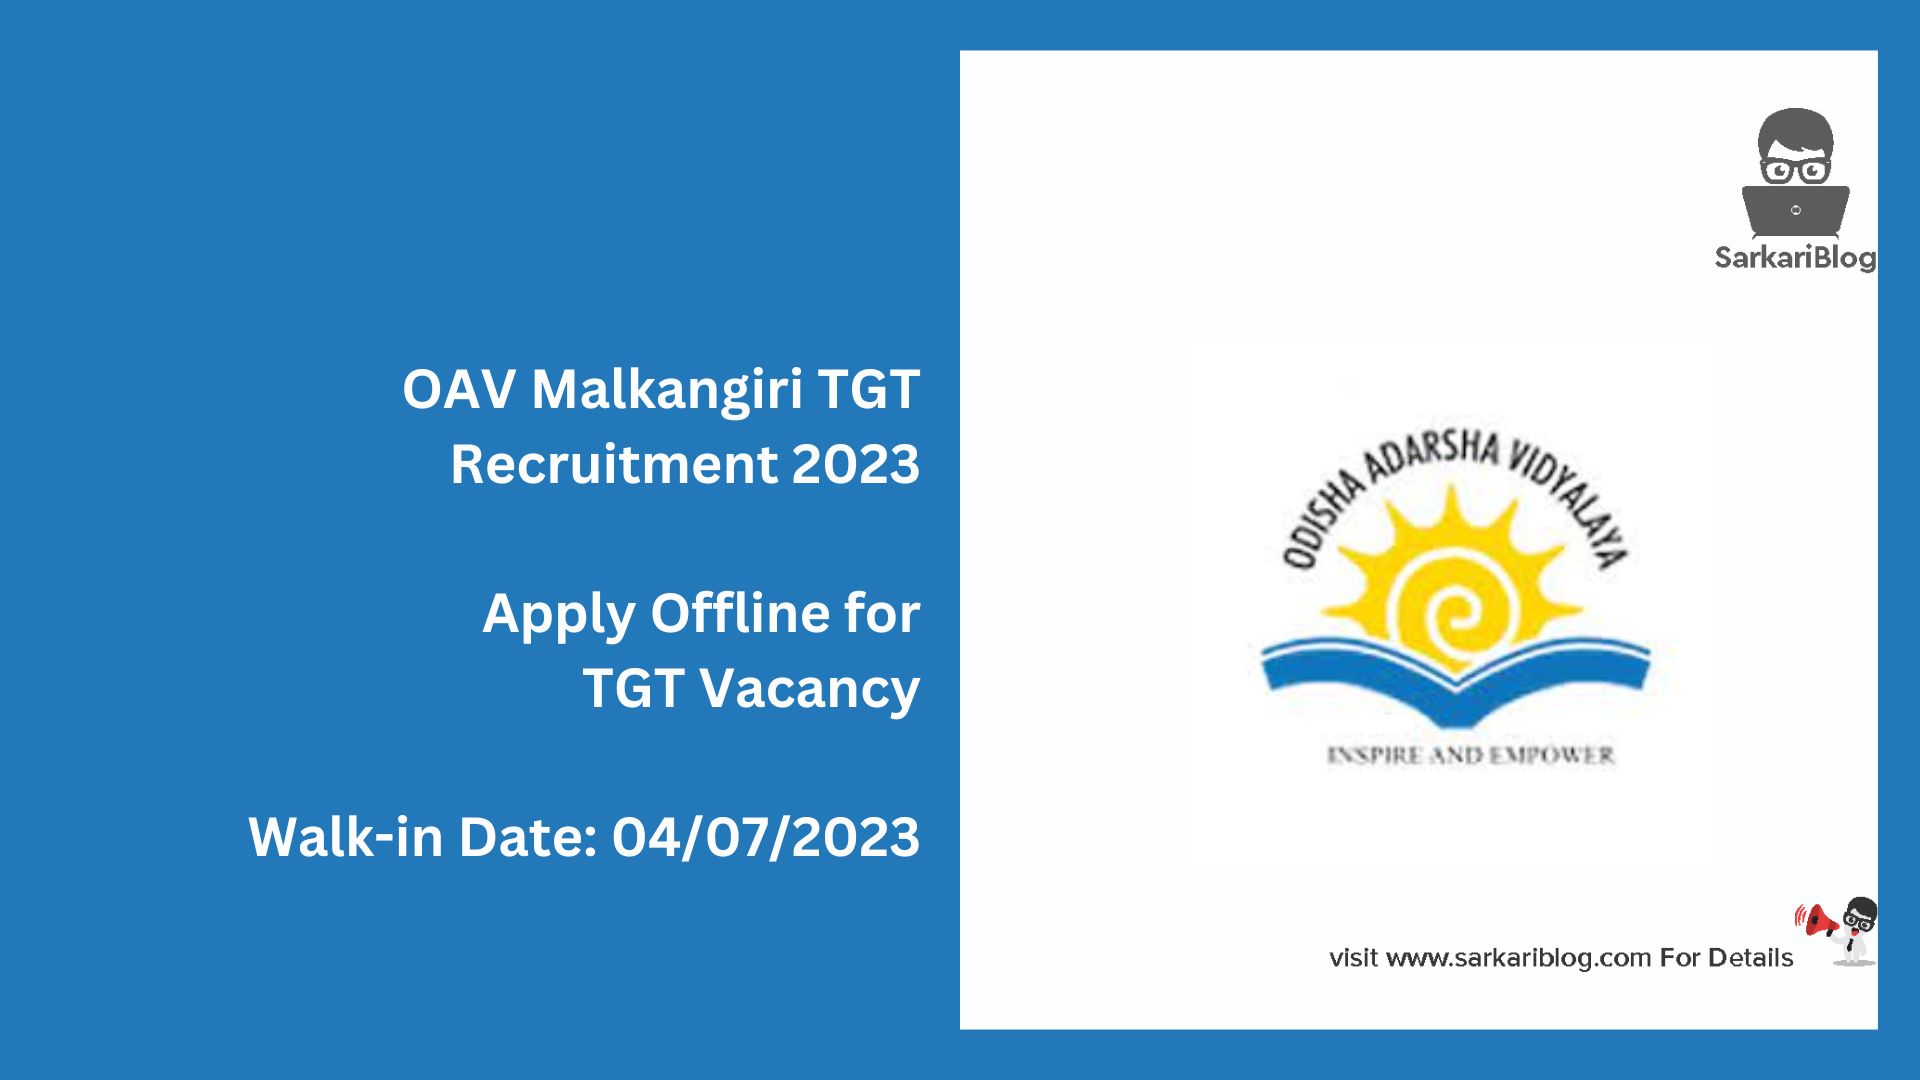 OAV Malkangiri TGT Recruitment 2023